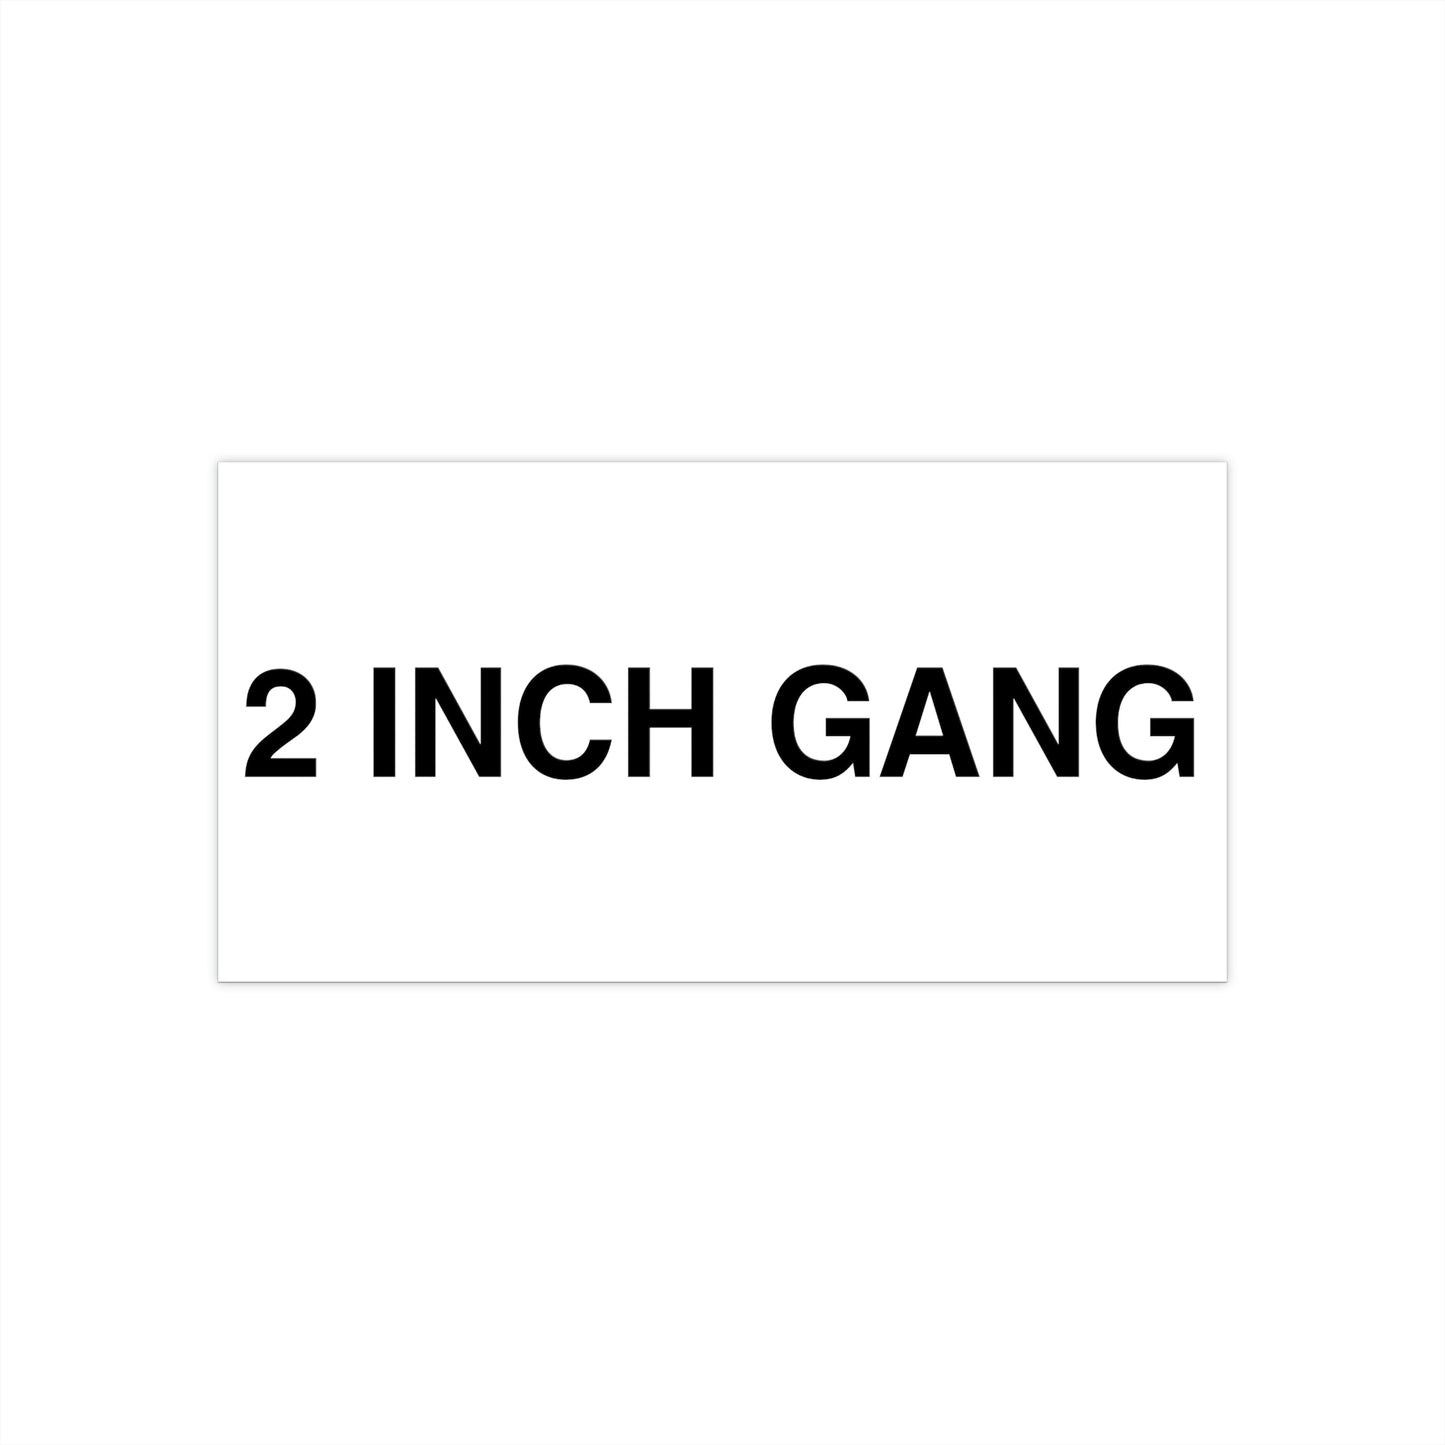 2 INCH GANG Bumper Sticker Black